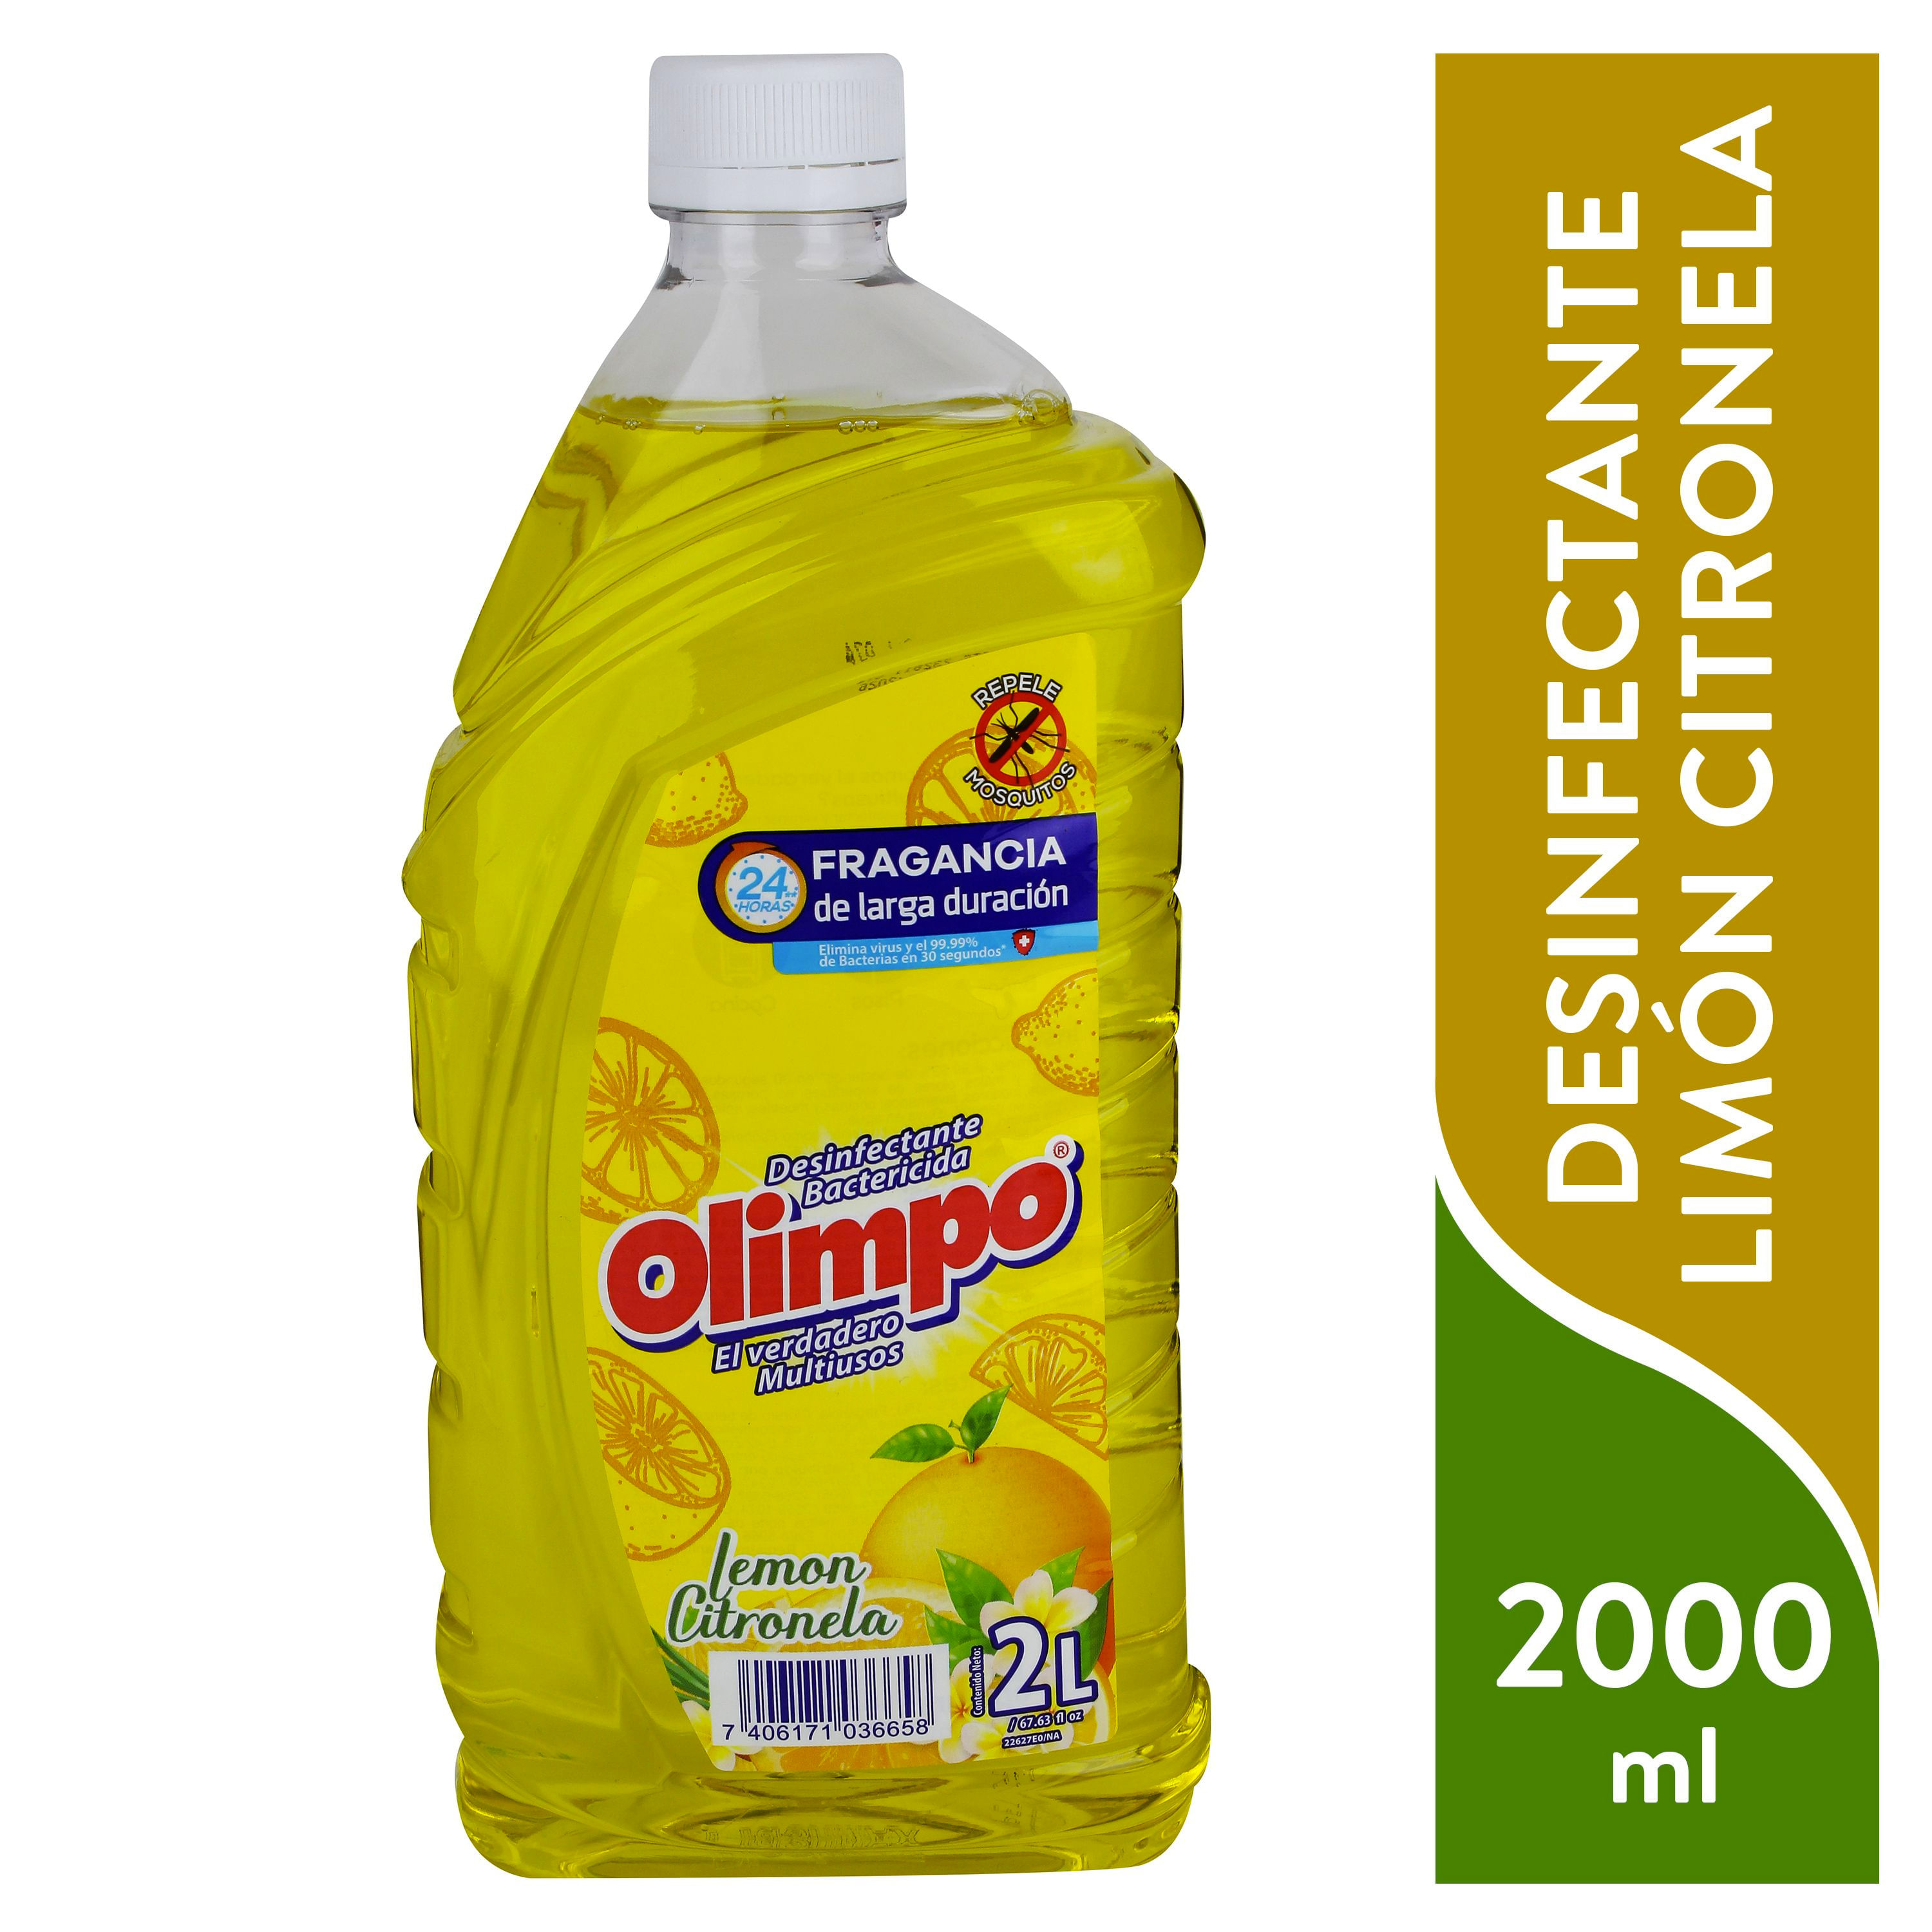 Vialplus Limpiador Baño+Antical Limpiador de baño desinfectante antical  acaba con gérmenes y bacterias 750